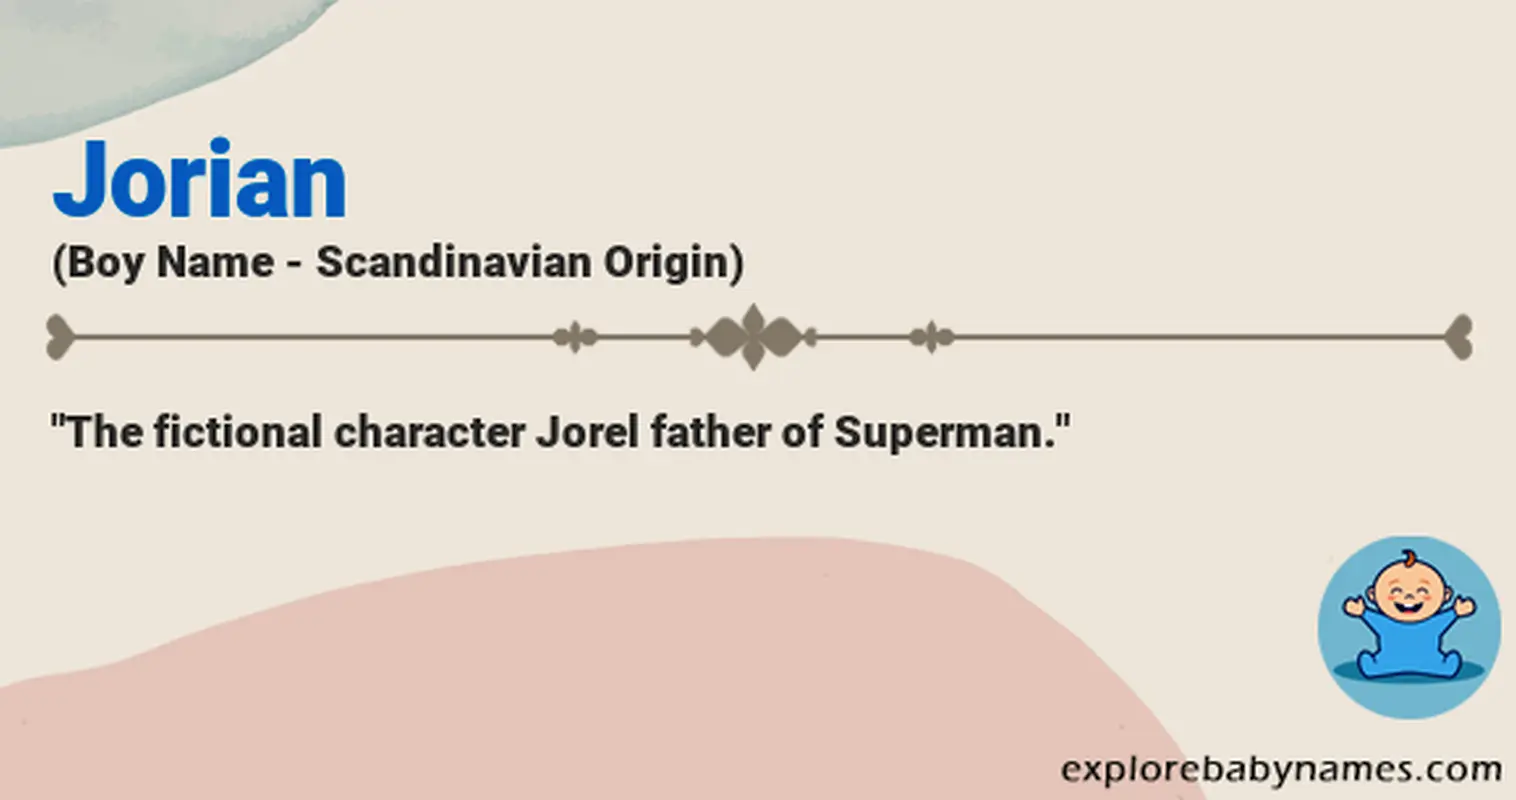 Meaning of Jorian